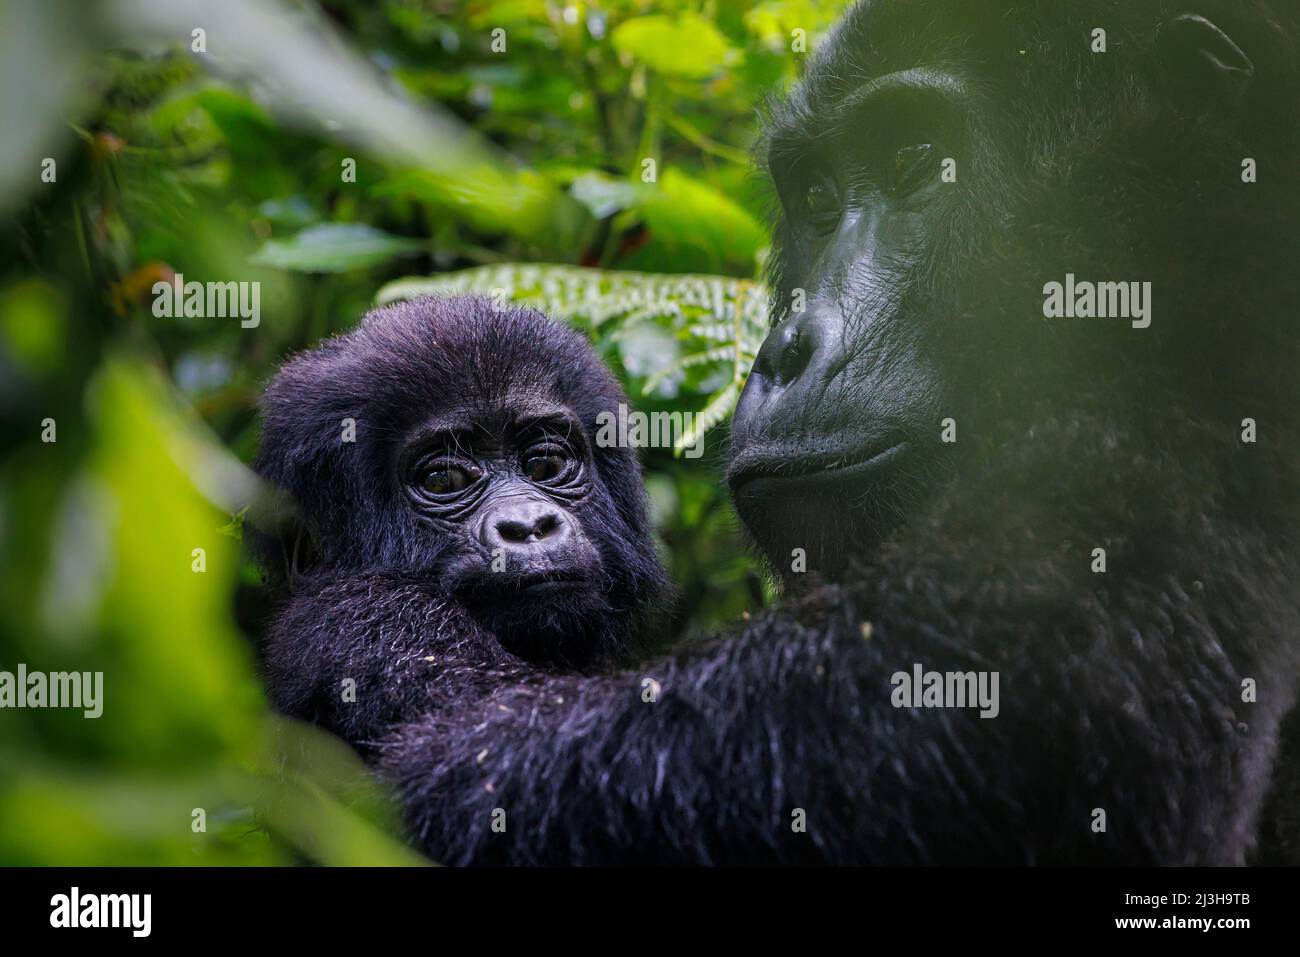 Uganda, Kanungu district, Ruhija, Bwindi impenetrable national Park listed as World Heritage by UNESCO, mountain gorilla and its baby Stock Photo